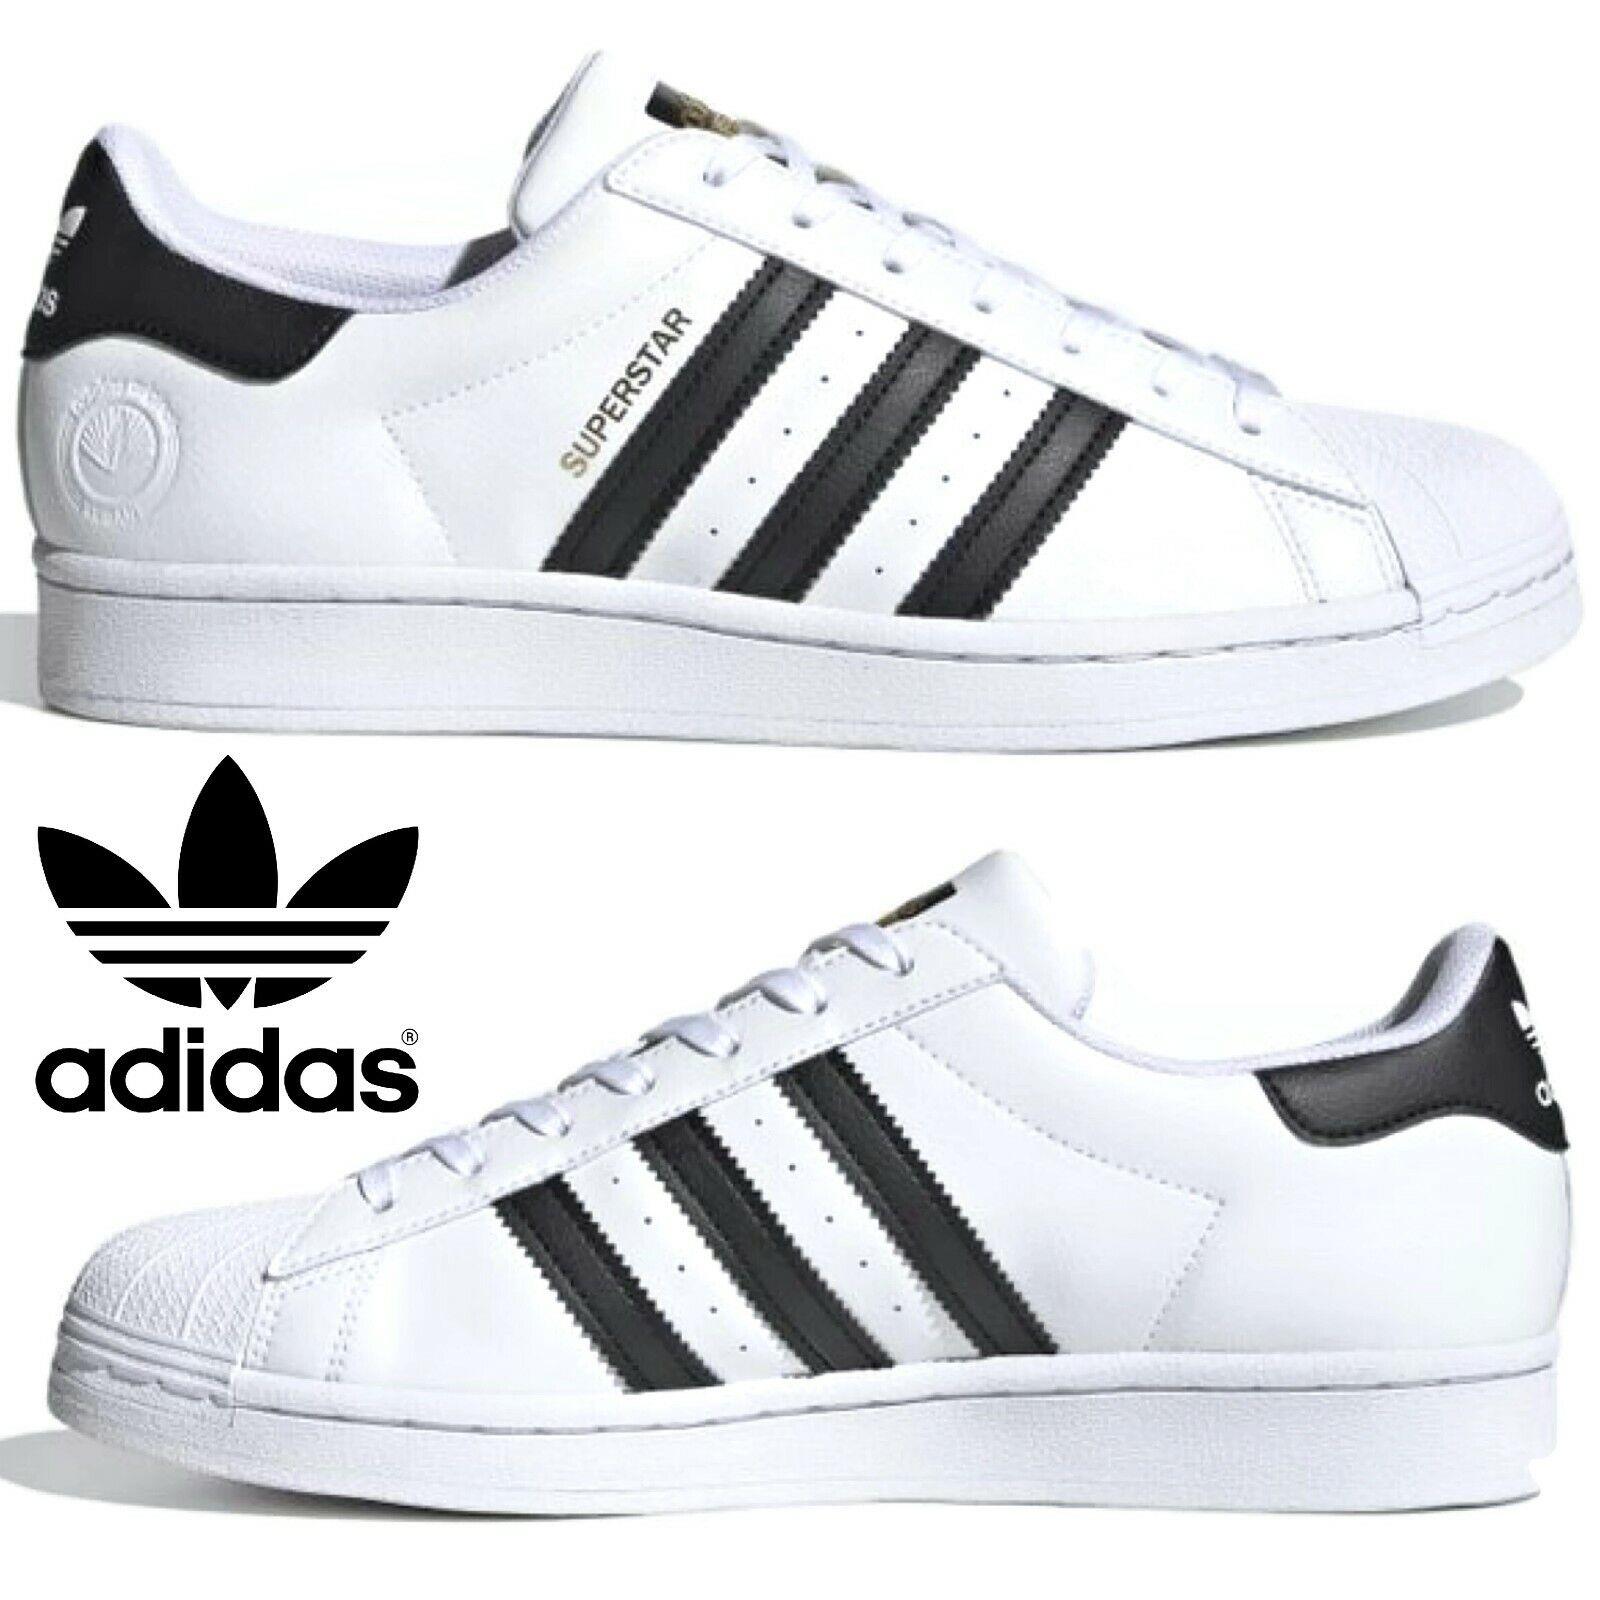 Adidas Originals Superstar Men`s Sneakers Comfort Sport Casual Shoes Vegan White